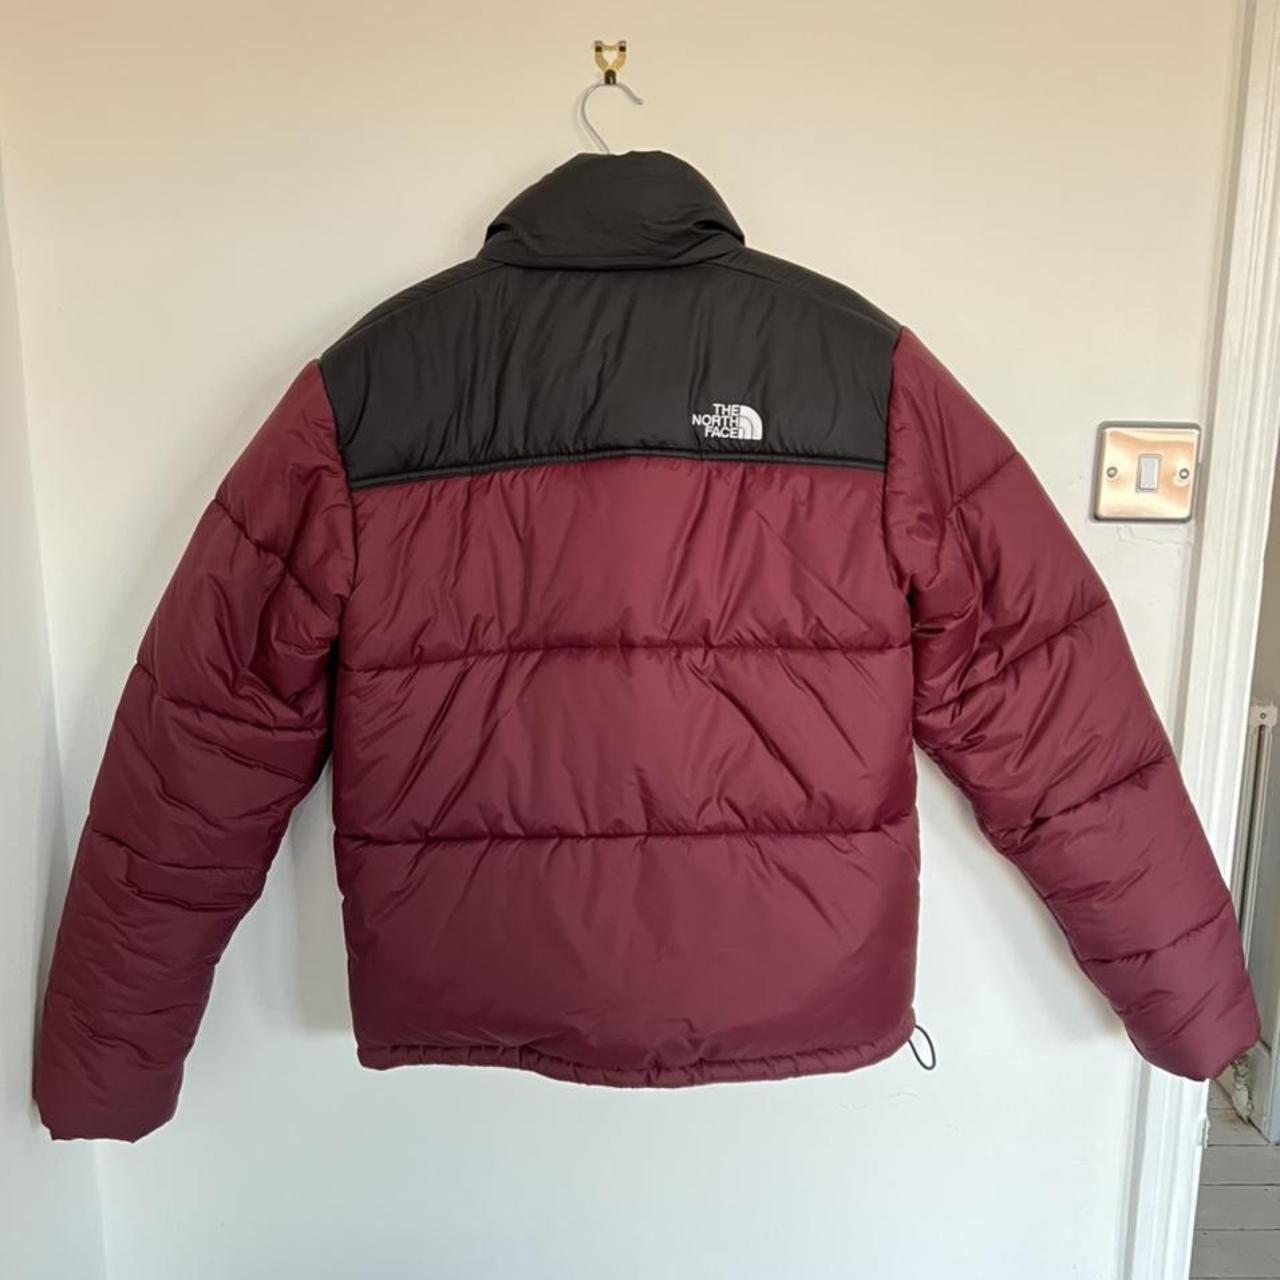 The North Face Saikuru puffer jacket in burgundy and... - Depop